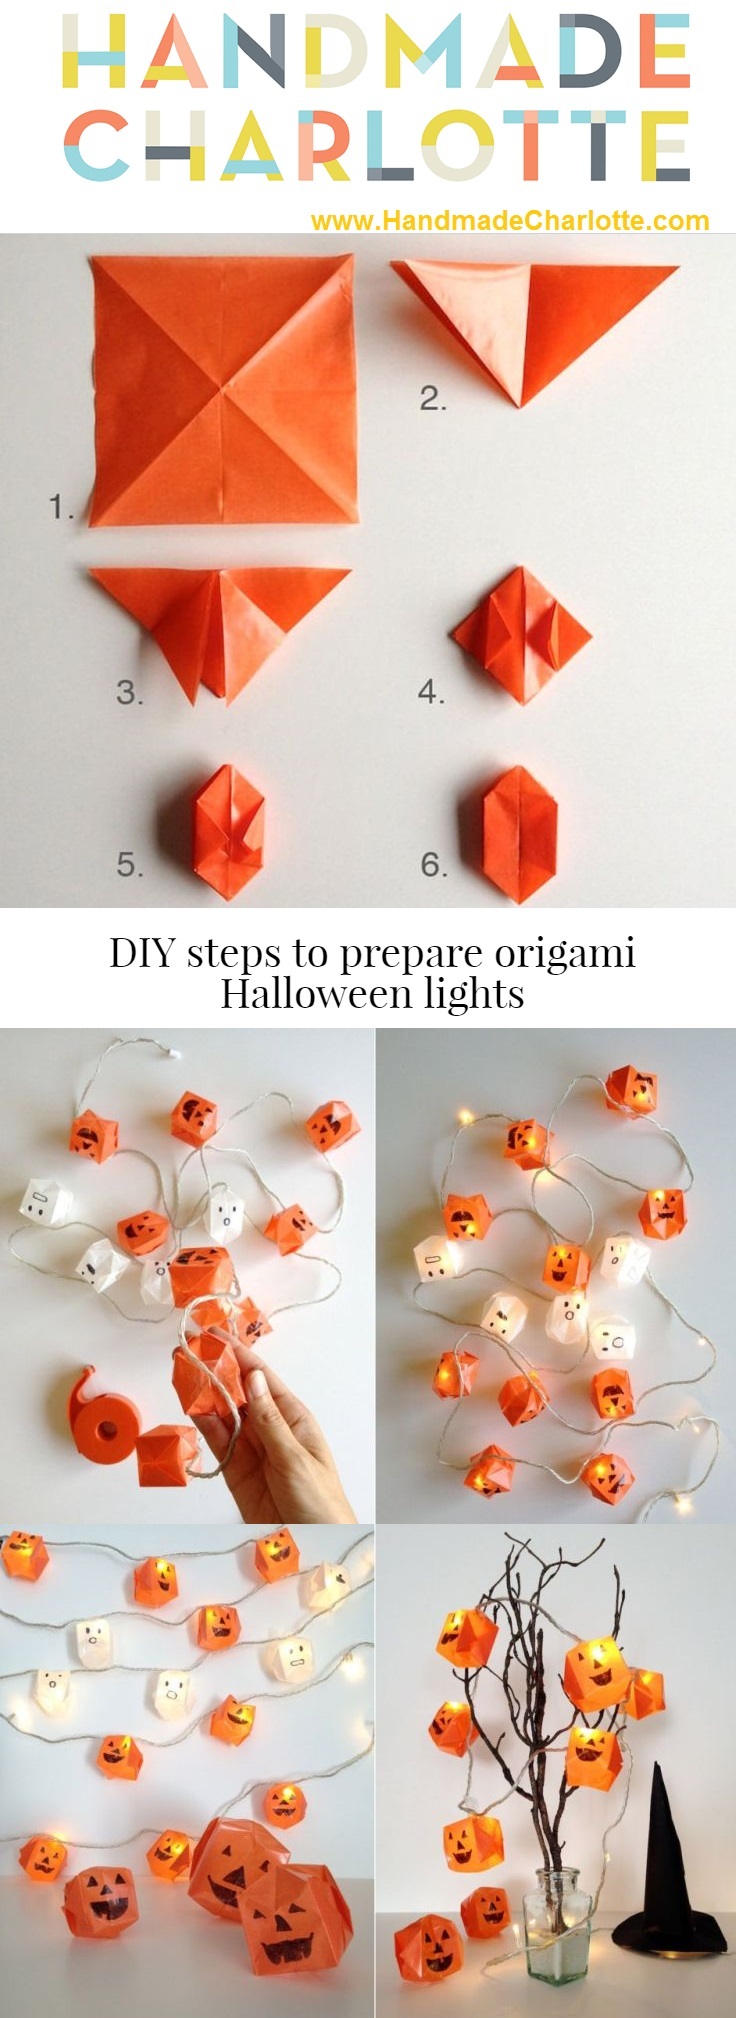 DIY Prepare Origami Halloween Lights